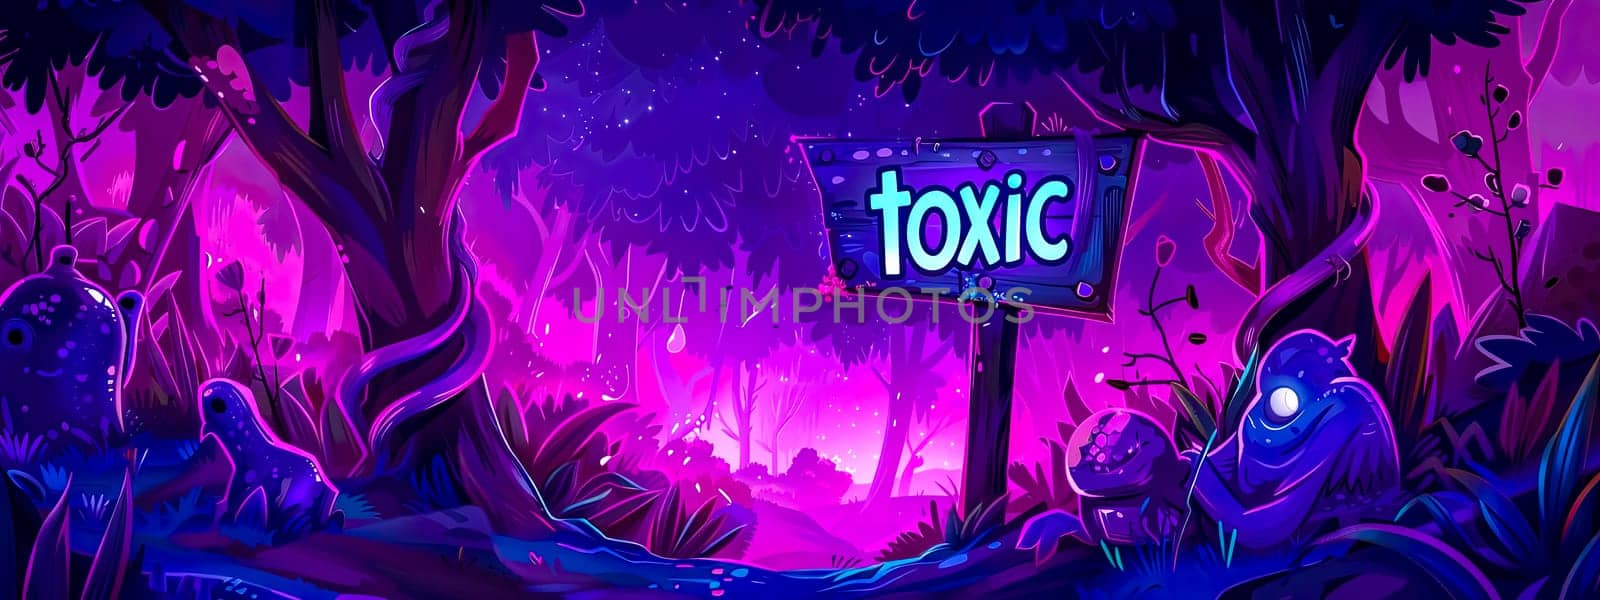 Enchanted toxic forest night scene by Edophoto